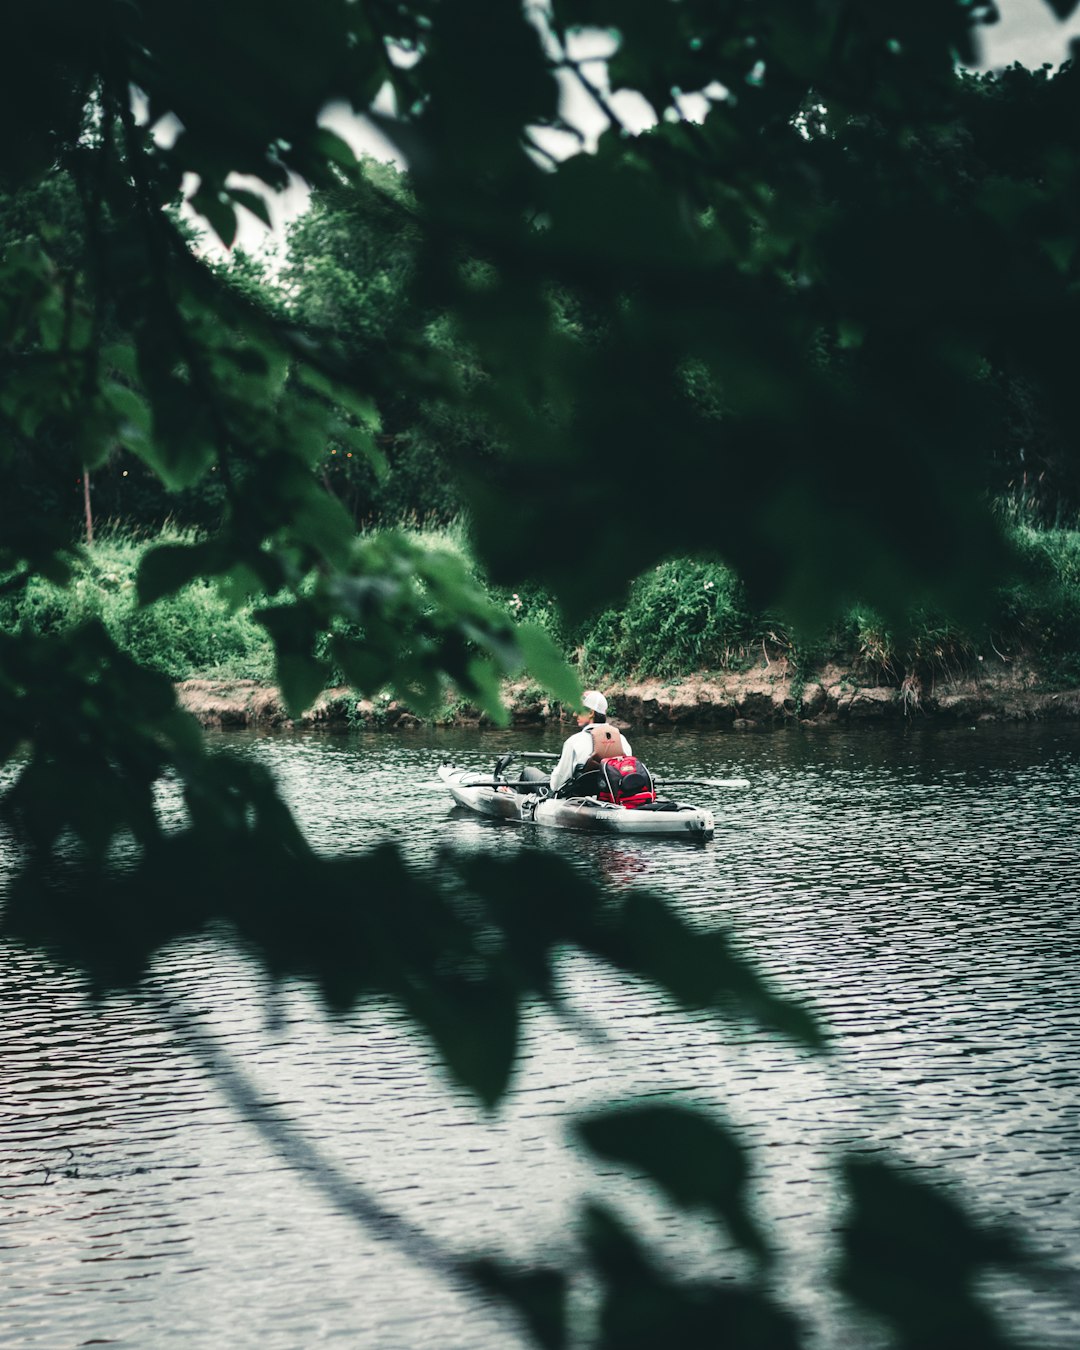 man in red shirt riding on red kayak on river during daytime